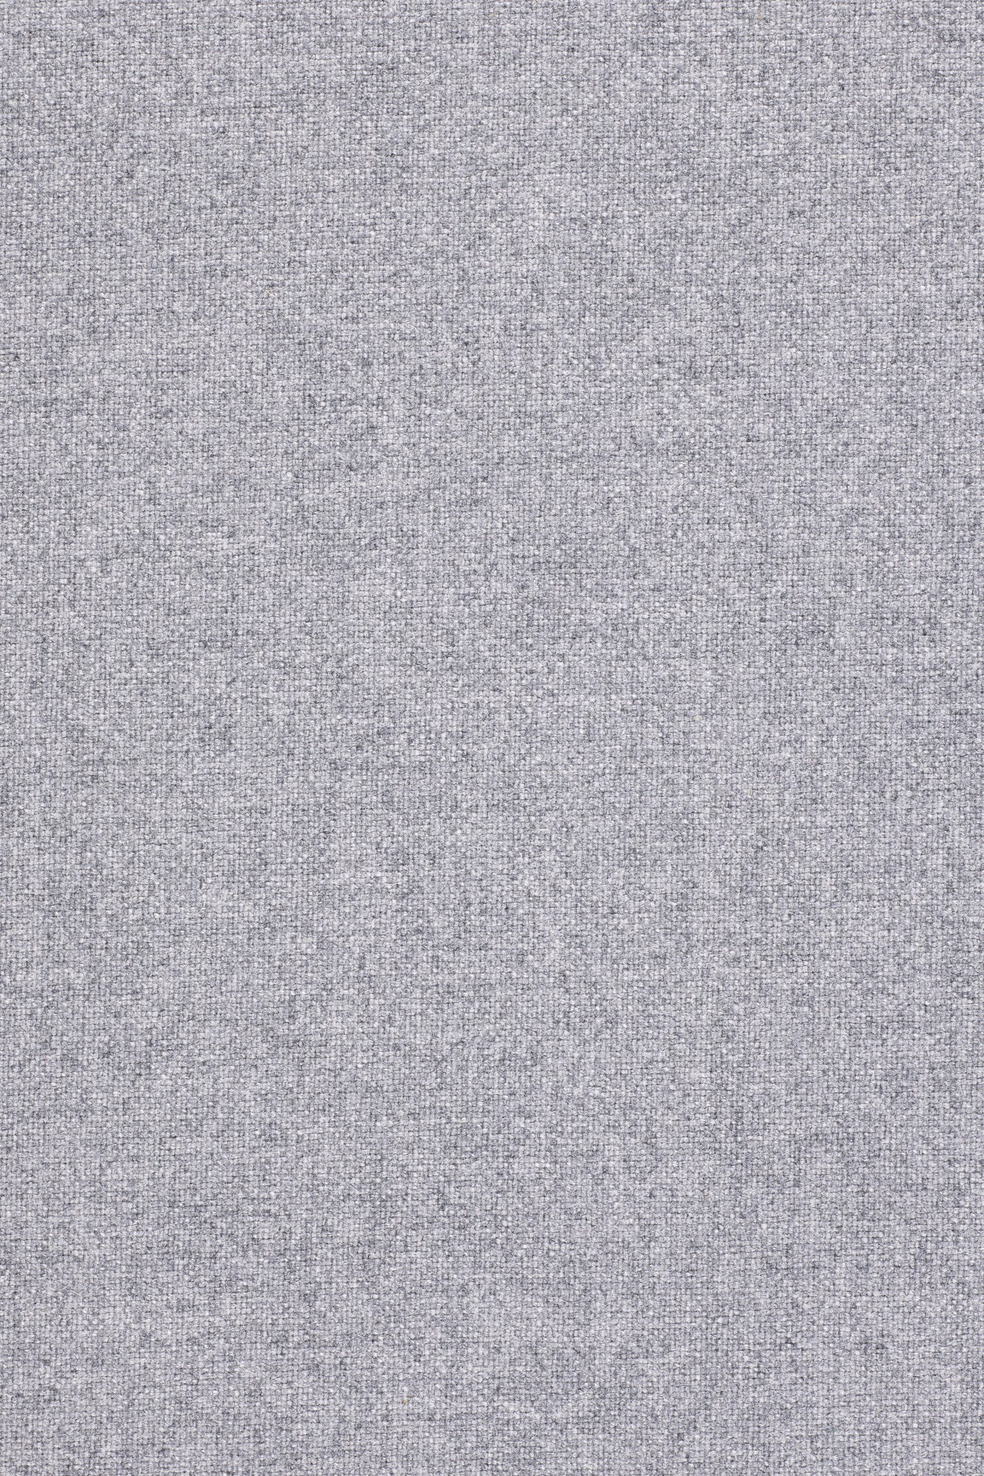 Fabric sample Tonica 2 633 purple